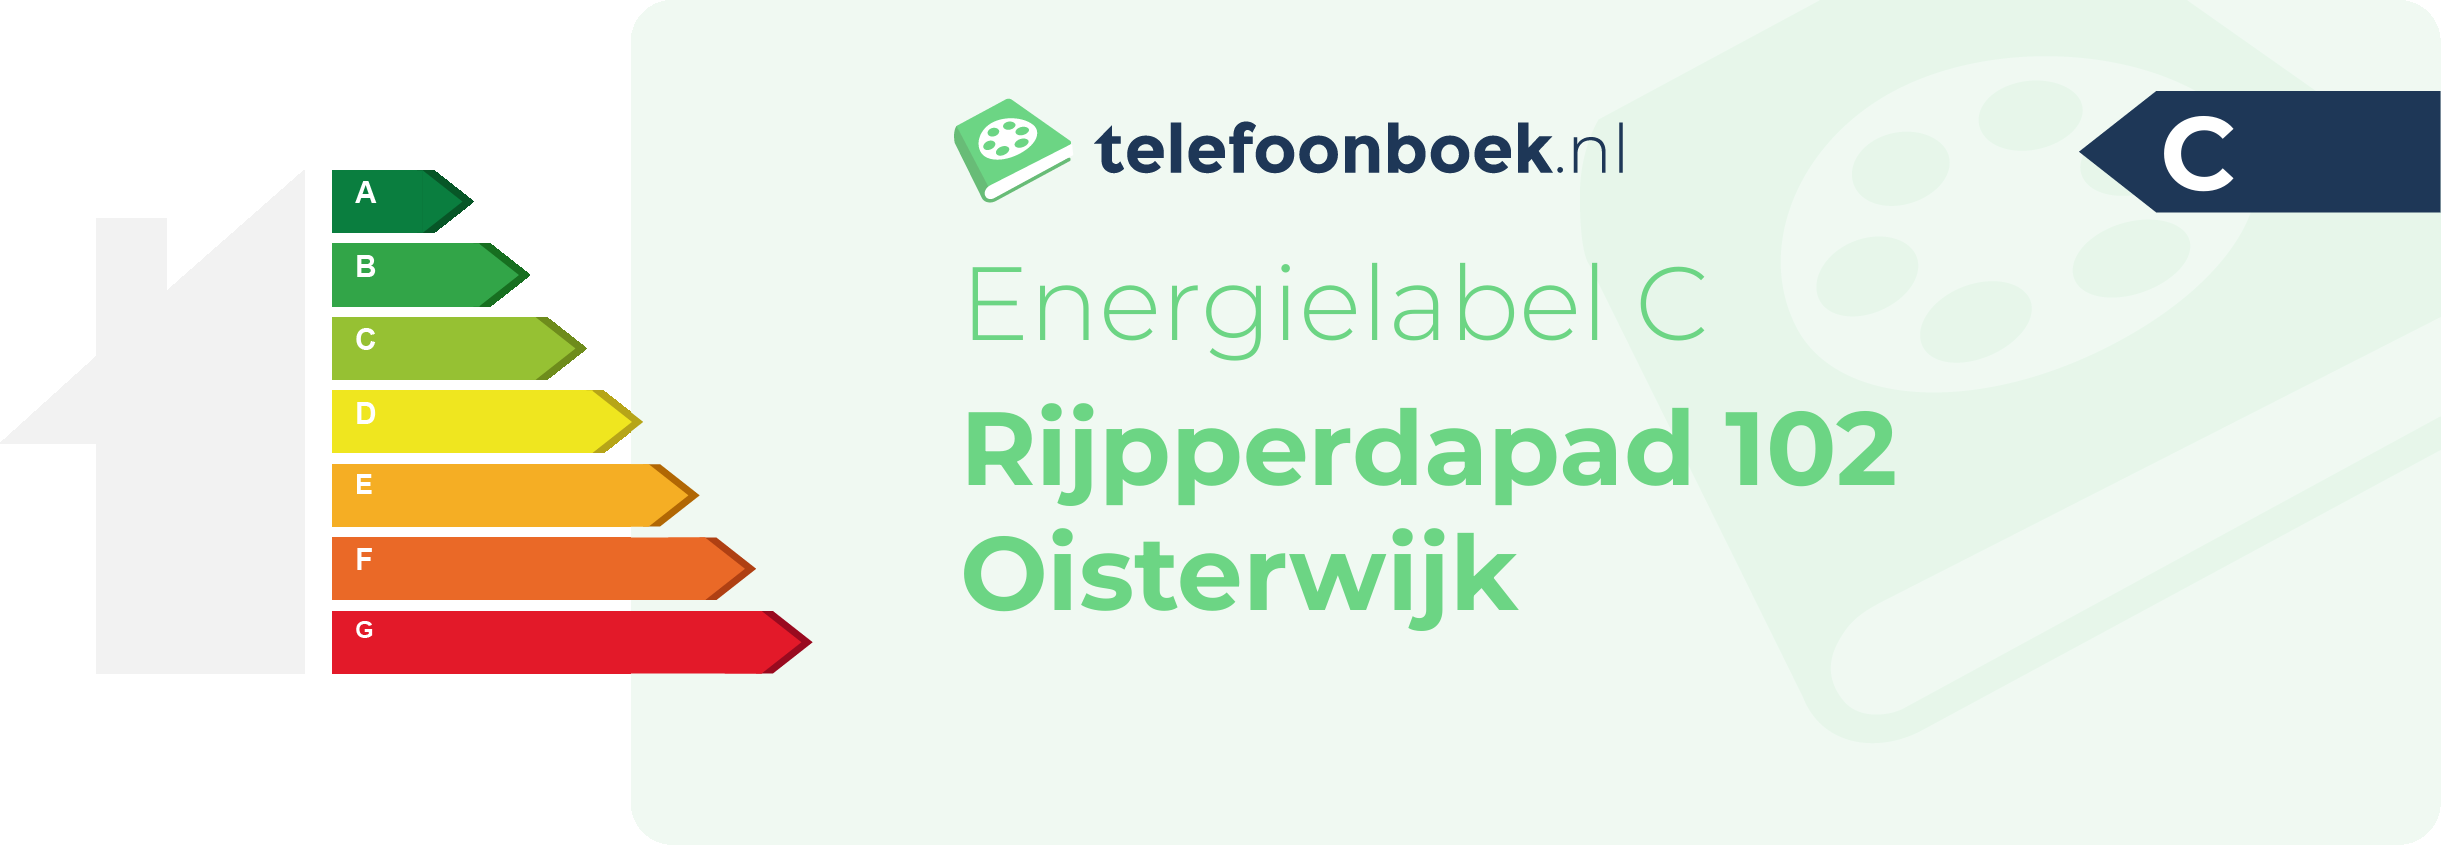 Energielabel Rijpperdapad 102 Oisterwijk